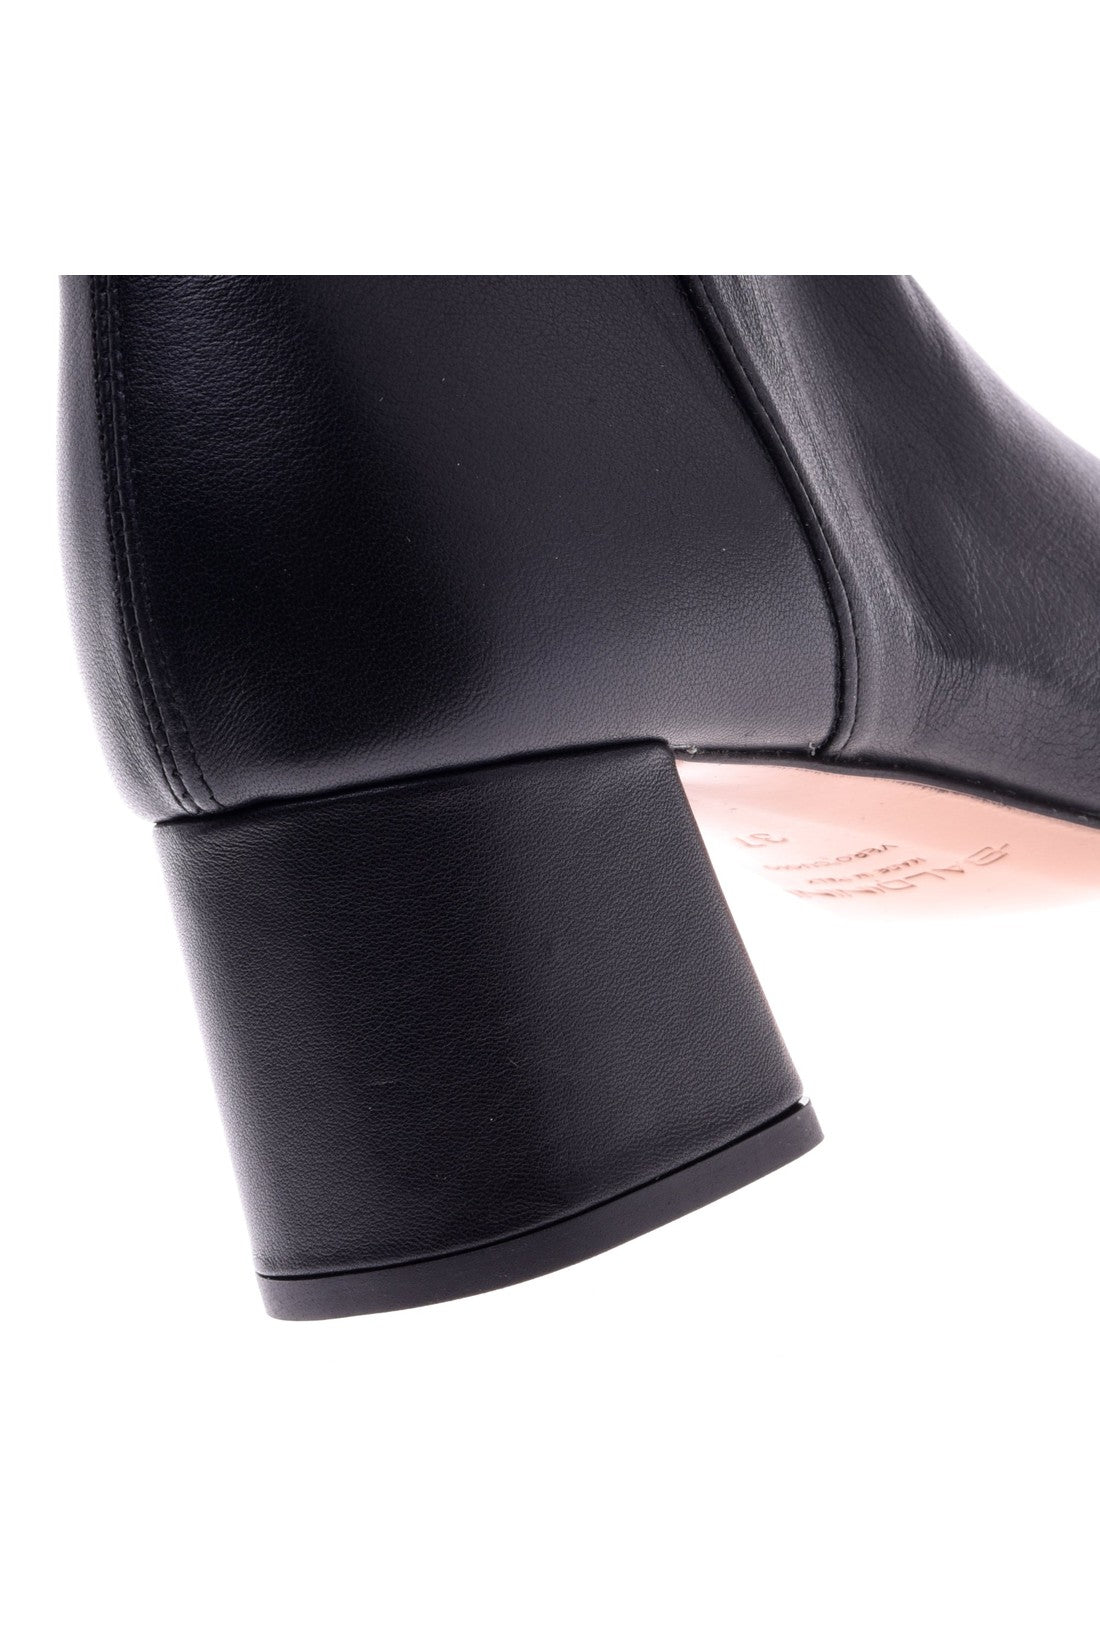 BALDININI-OUTLET-SALE-Ankle-boot-in-black-nappa-leather-Stiefel-Stiefeletten-ARCHIVE-COLLECTION-4_db9d13dd-f201-4263-85a7-e34e928622fc.jpg